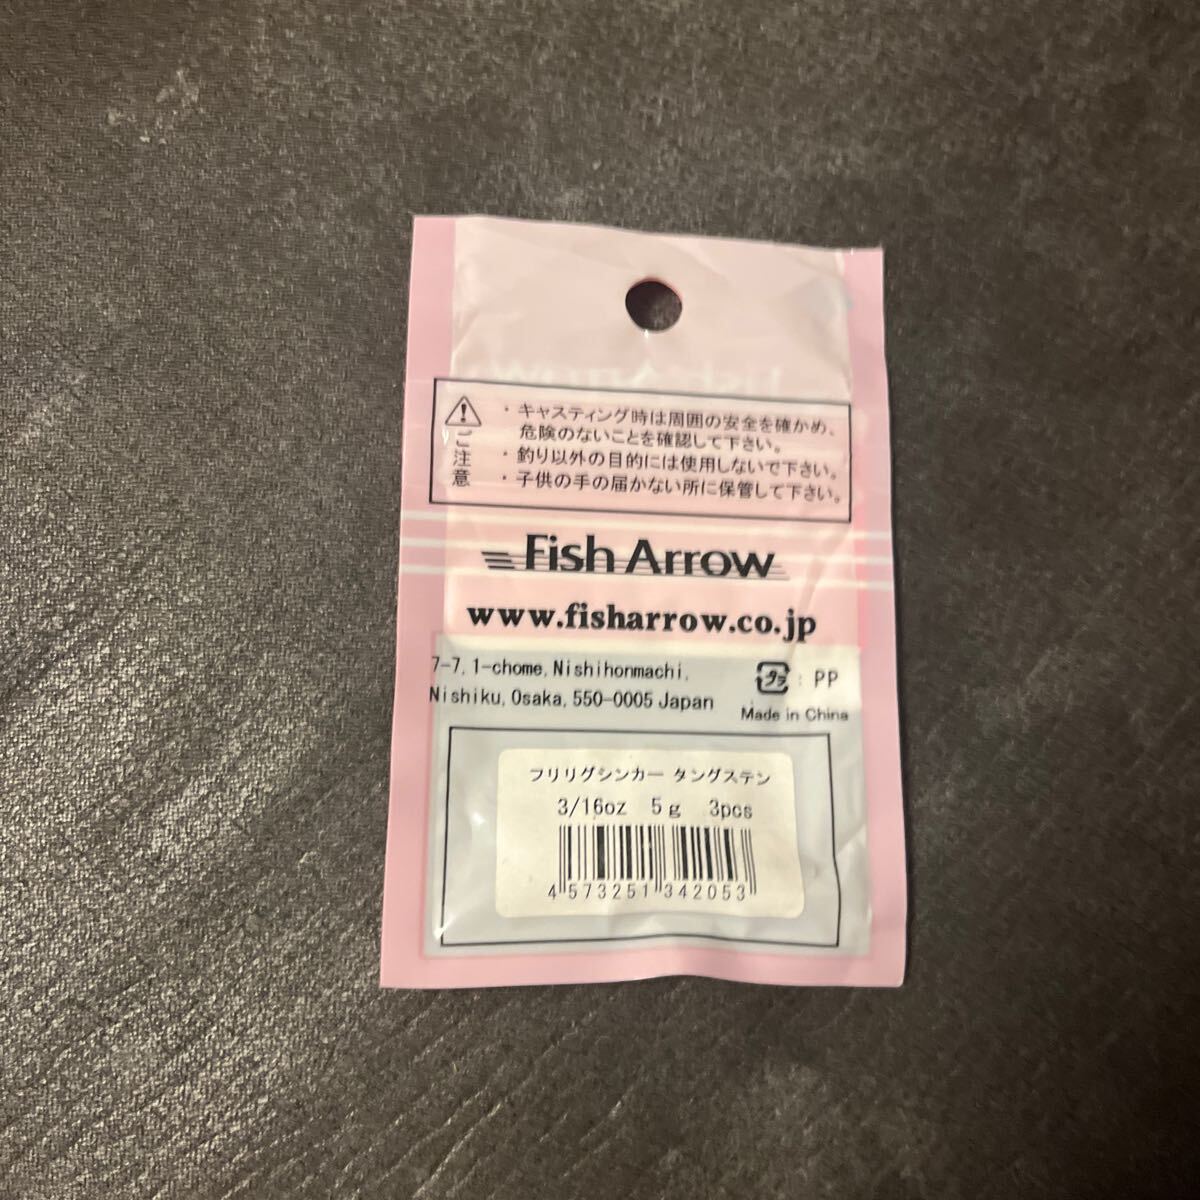  postage 84 jpy fish Arrow fliligsin car tang stain 5g 3/16oz FISH ARROW free ligTGsin car swivel type 2 piece 